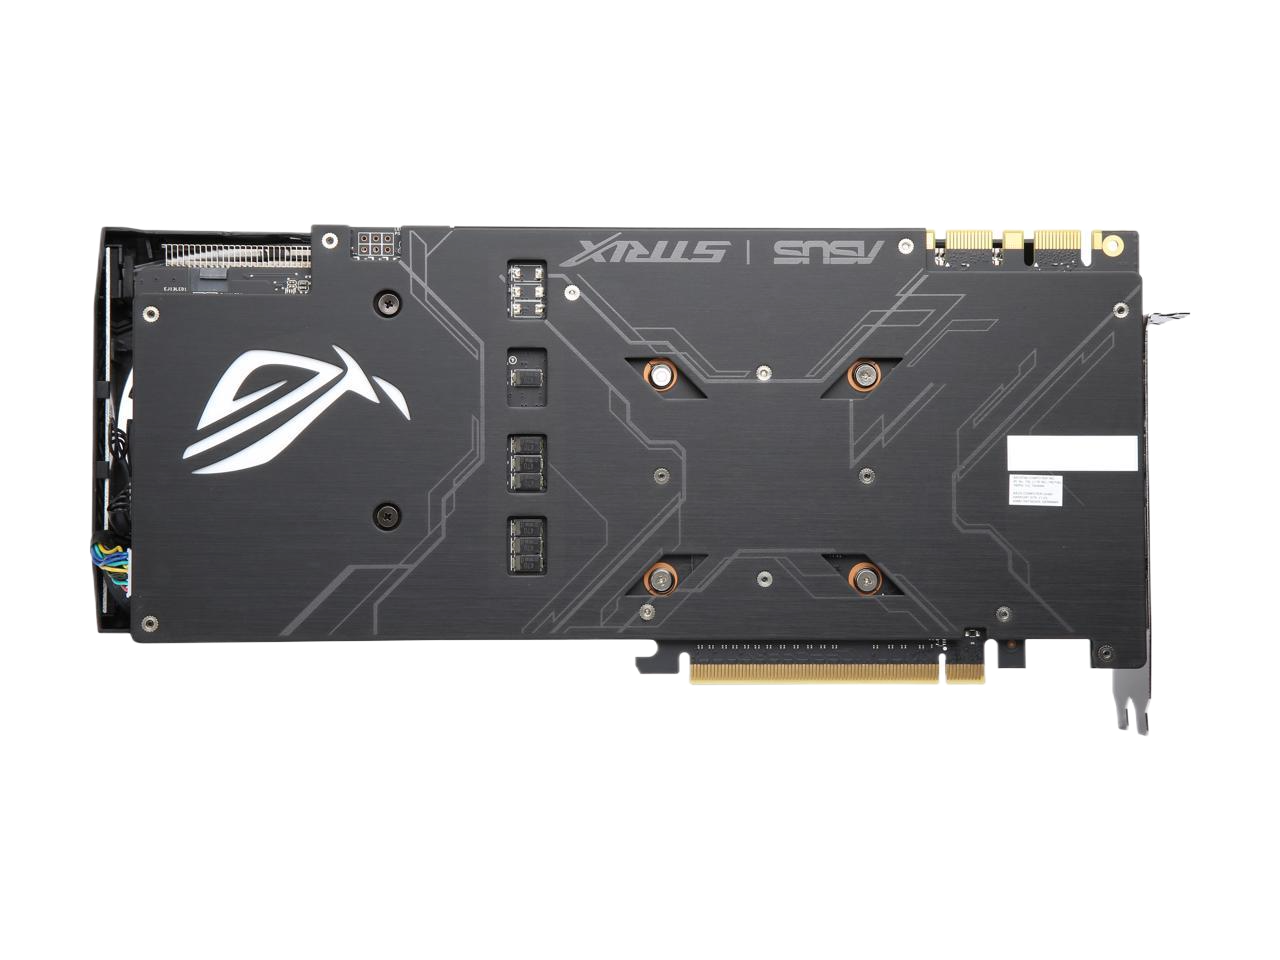 ASUS ROG GeForce GTX 1080 Ti 11GB GDDR5X DirectX 12 352-Bit HDCP Ready SLI Support Video Card STRIX-GTX1080TI-11G-GAMING